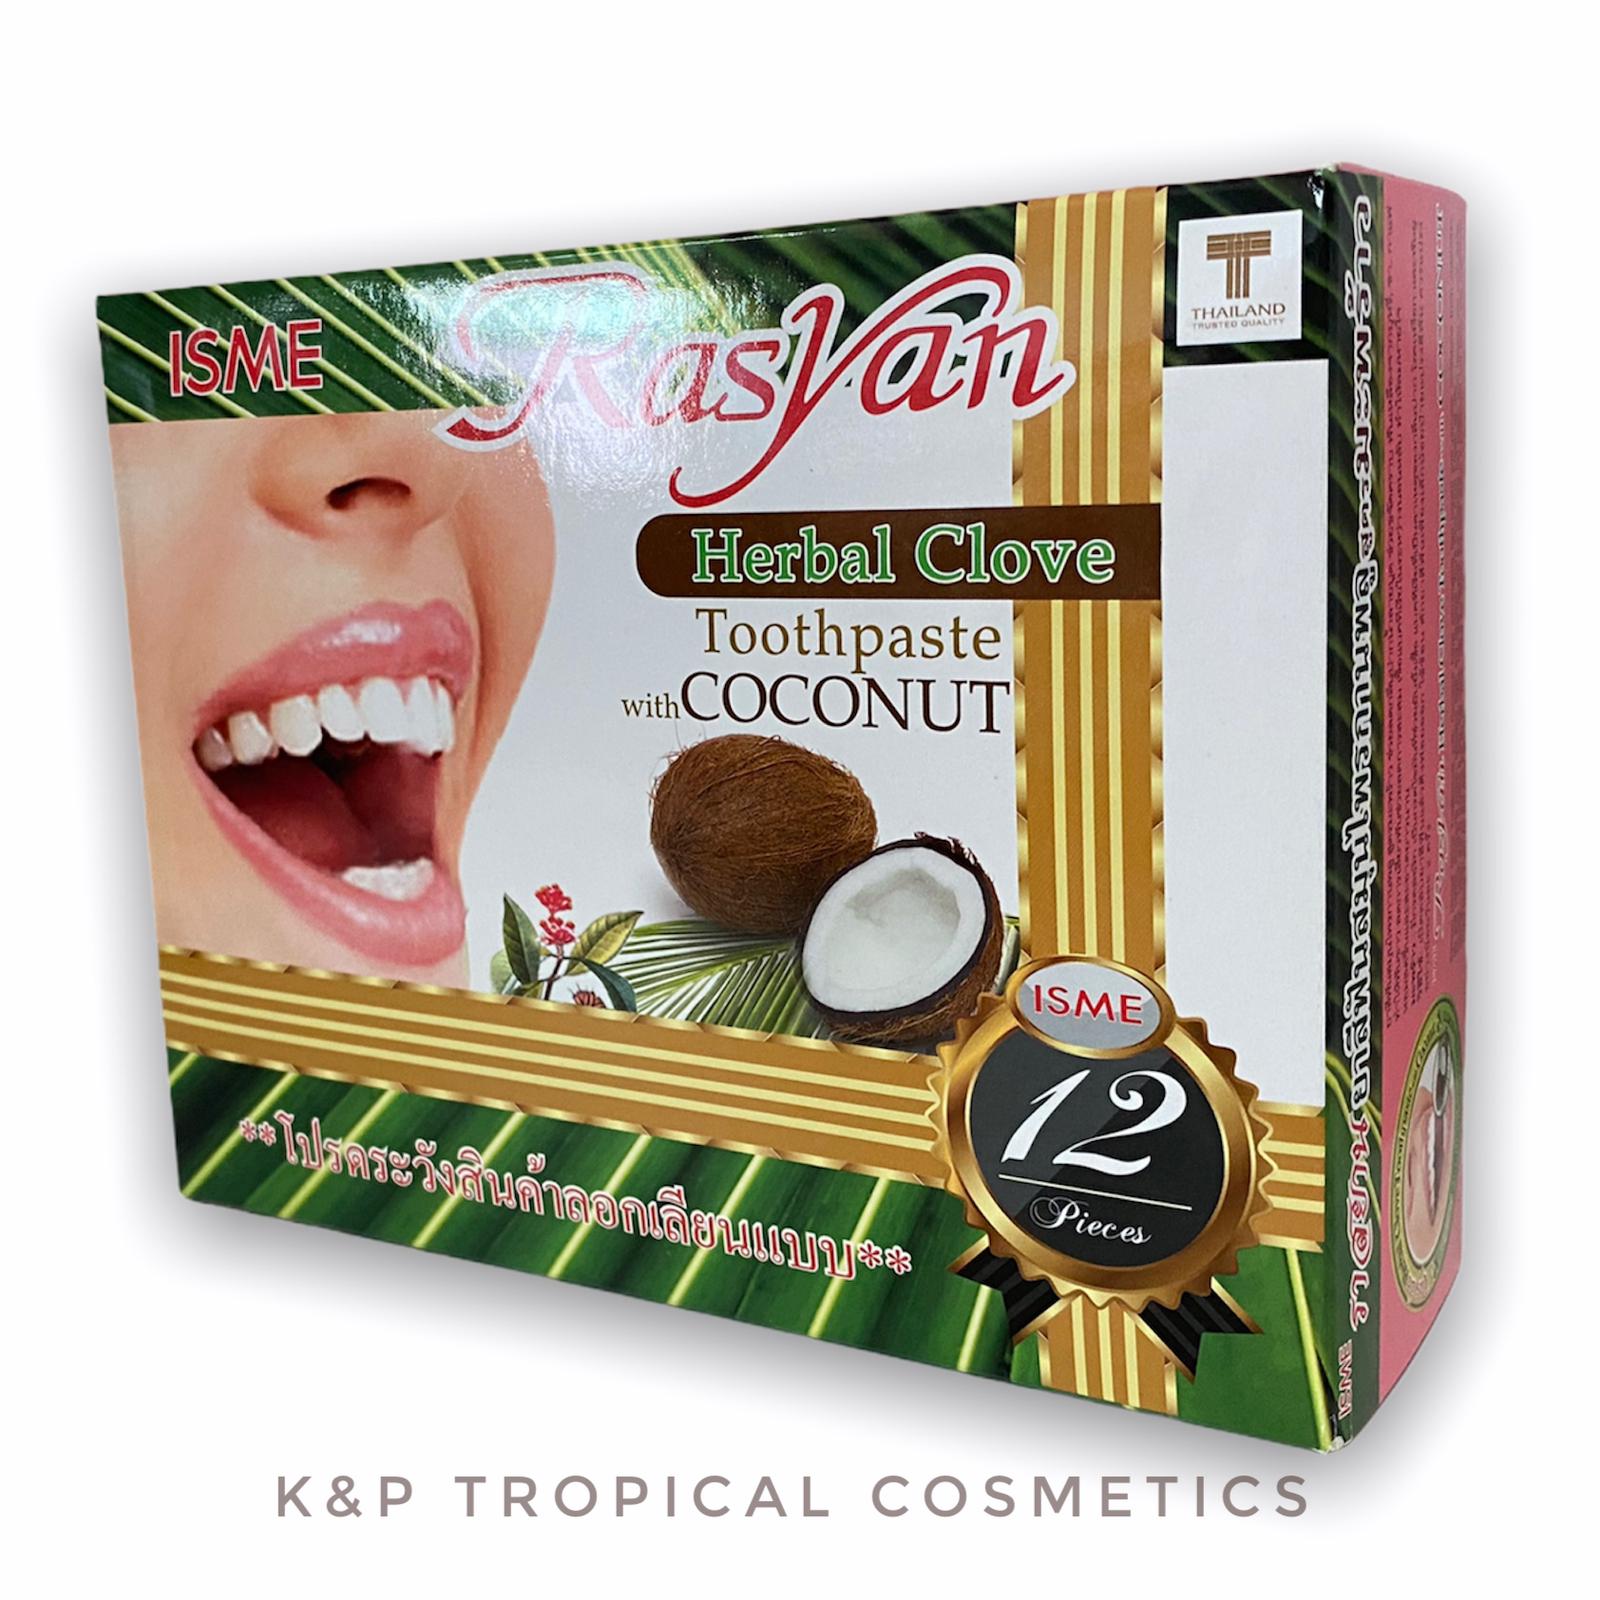 Isme Herbal Clove Toothpaste Rasyan With Coconut 25 g.*12 pcs., Отбеливающая зубная паста на основе гвоздичного и кокосового масла, упаковка 25 гр.*12 шт.